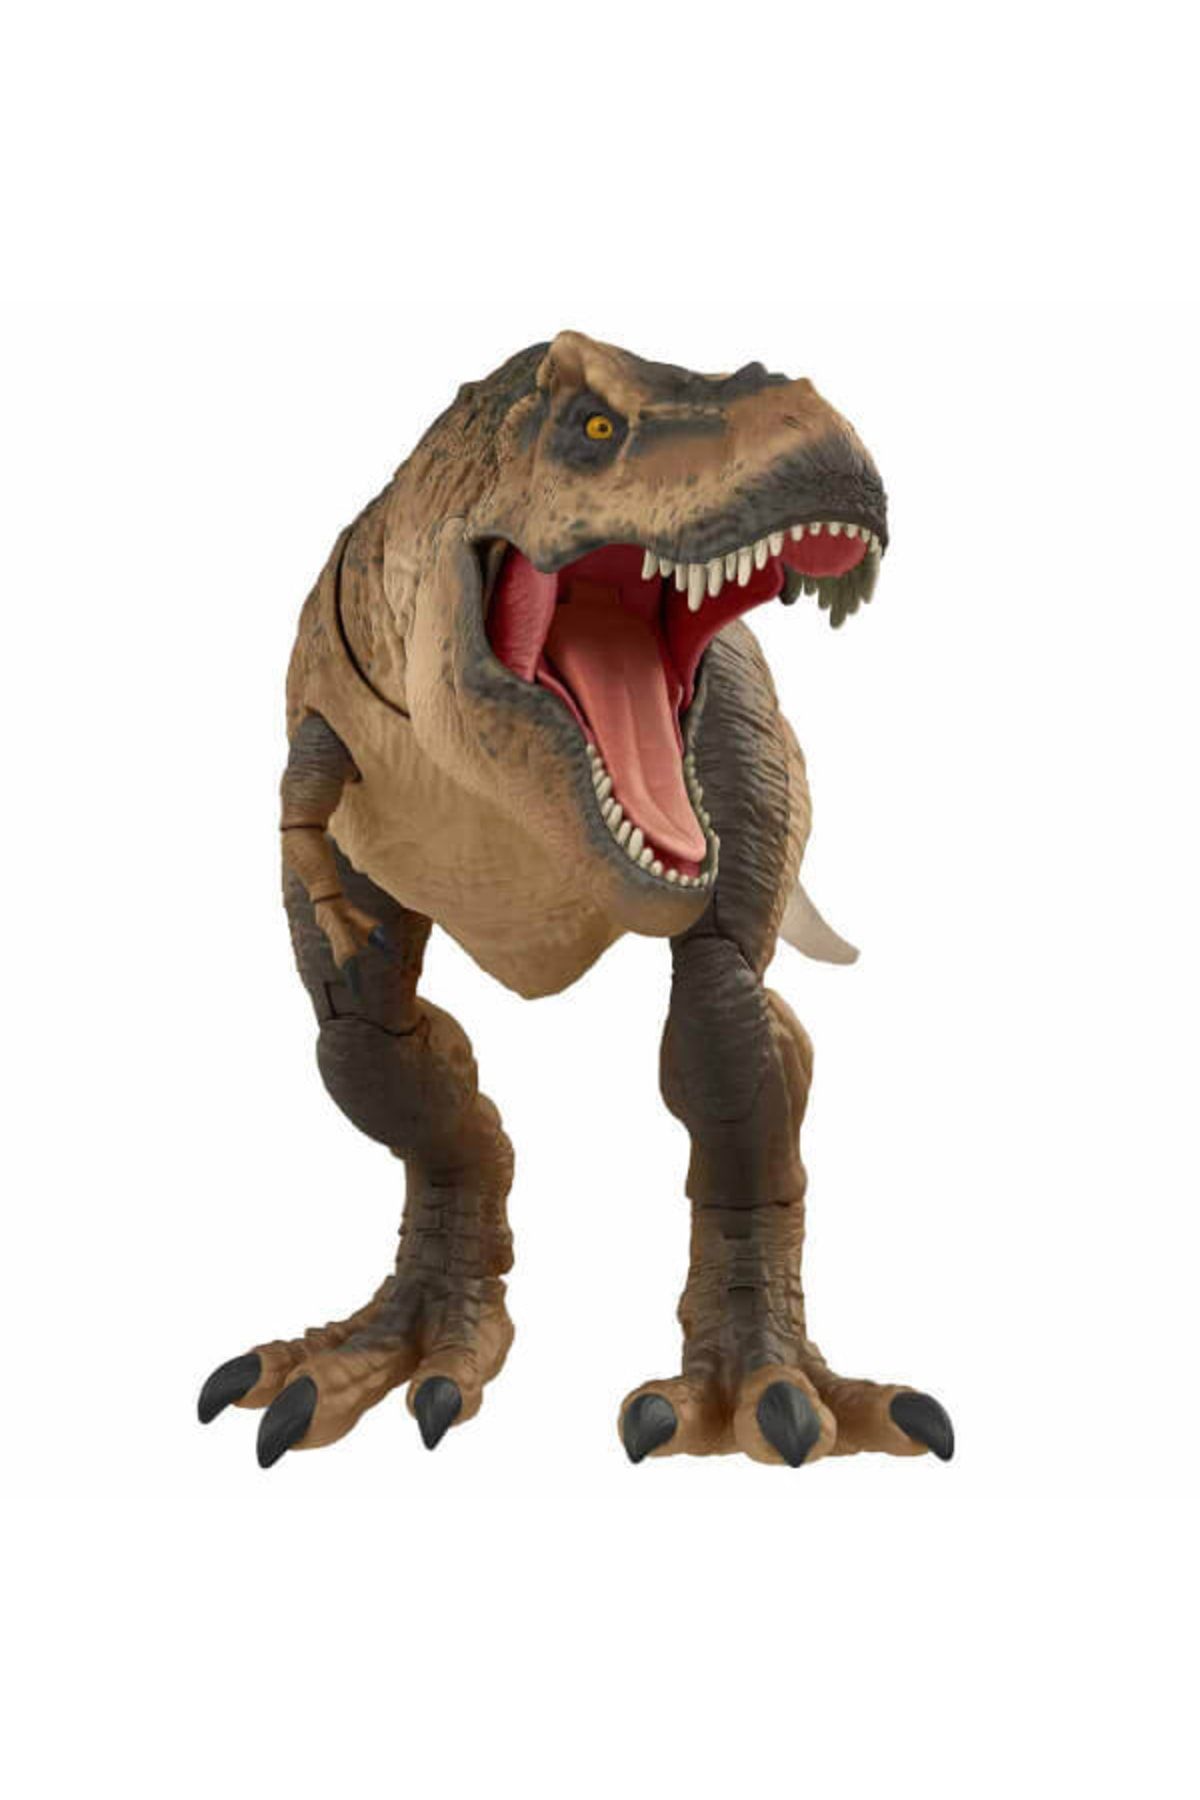 Jurassic World Jurassis World Yetişkin Koleksiyon T-rex Figürü Hfg66